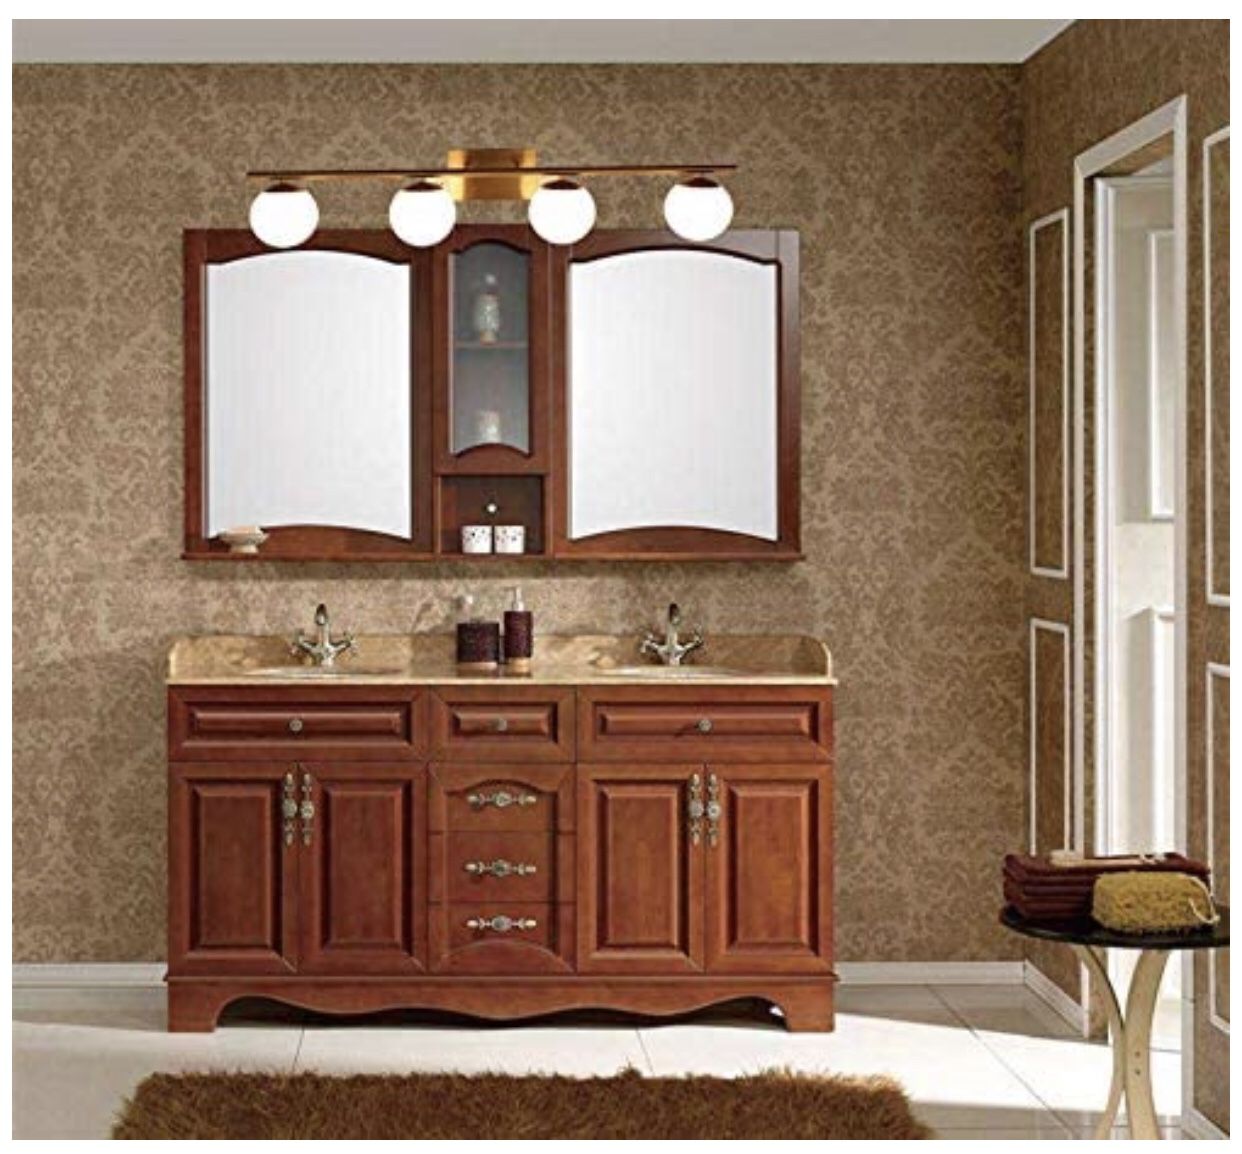 YHTlaeh New Bathroom Vanity Light Fixtures 4 Lights Brushed Brass Glass Shade Modern Wall Bar Sconce Over Mirror